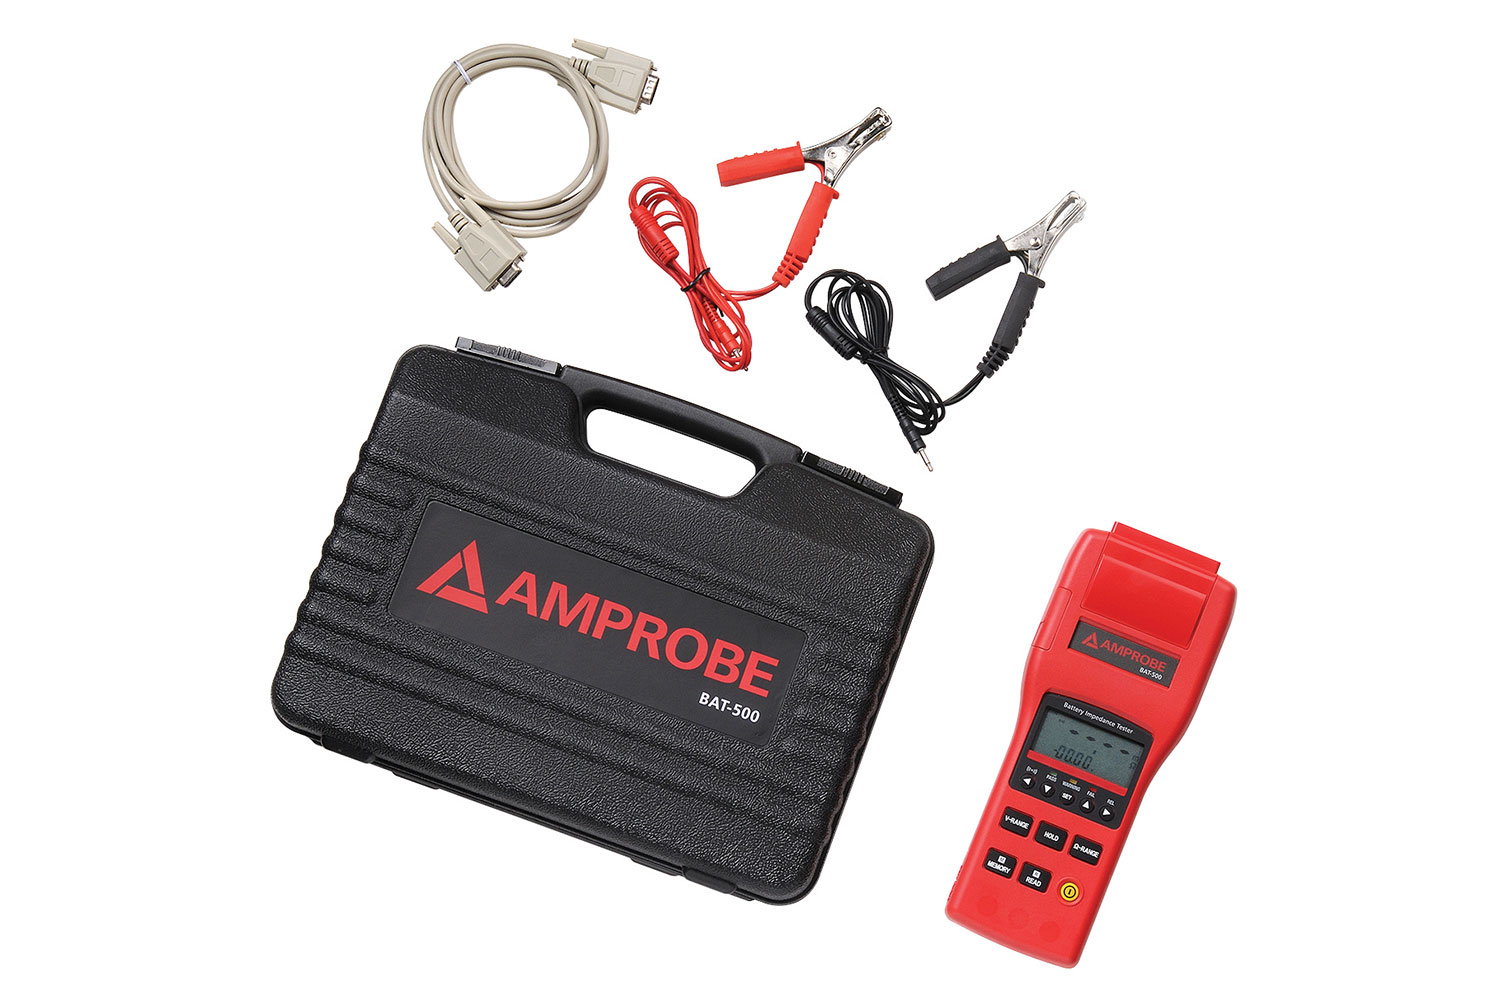 Up тестер запчасть. Amprobe IRDA-USB-Cable Insulation Tester Cable, for use with Amprobe Testers, кабель. Ремонт прибор bat—500.